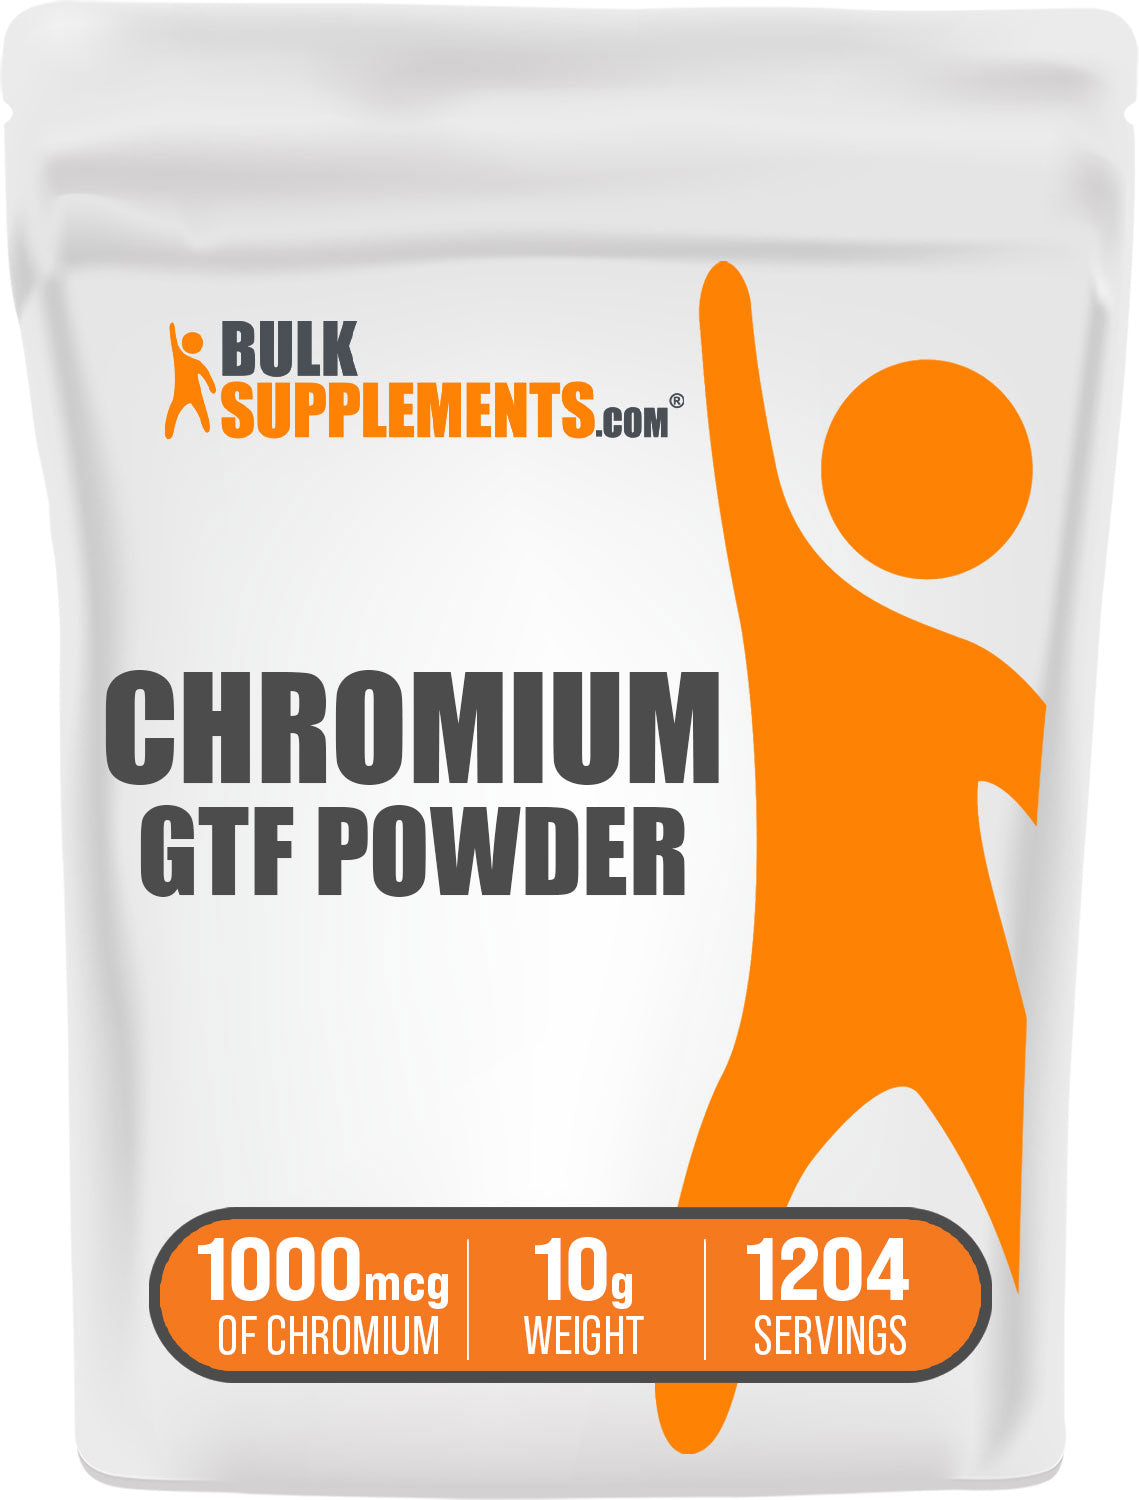 10g gtf chromium